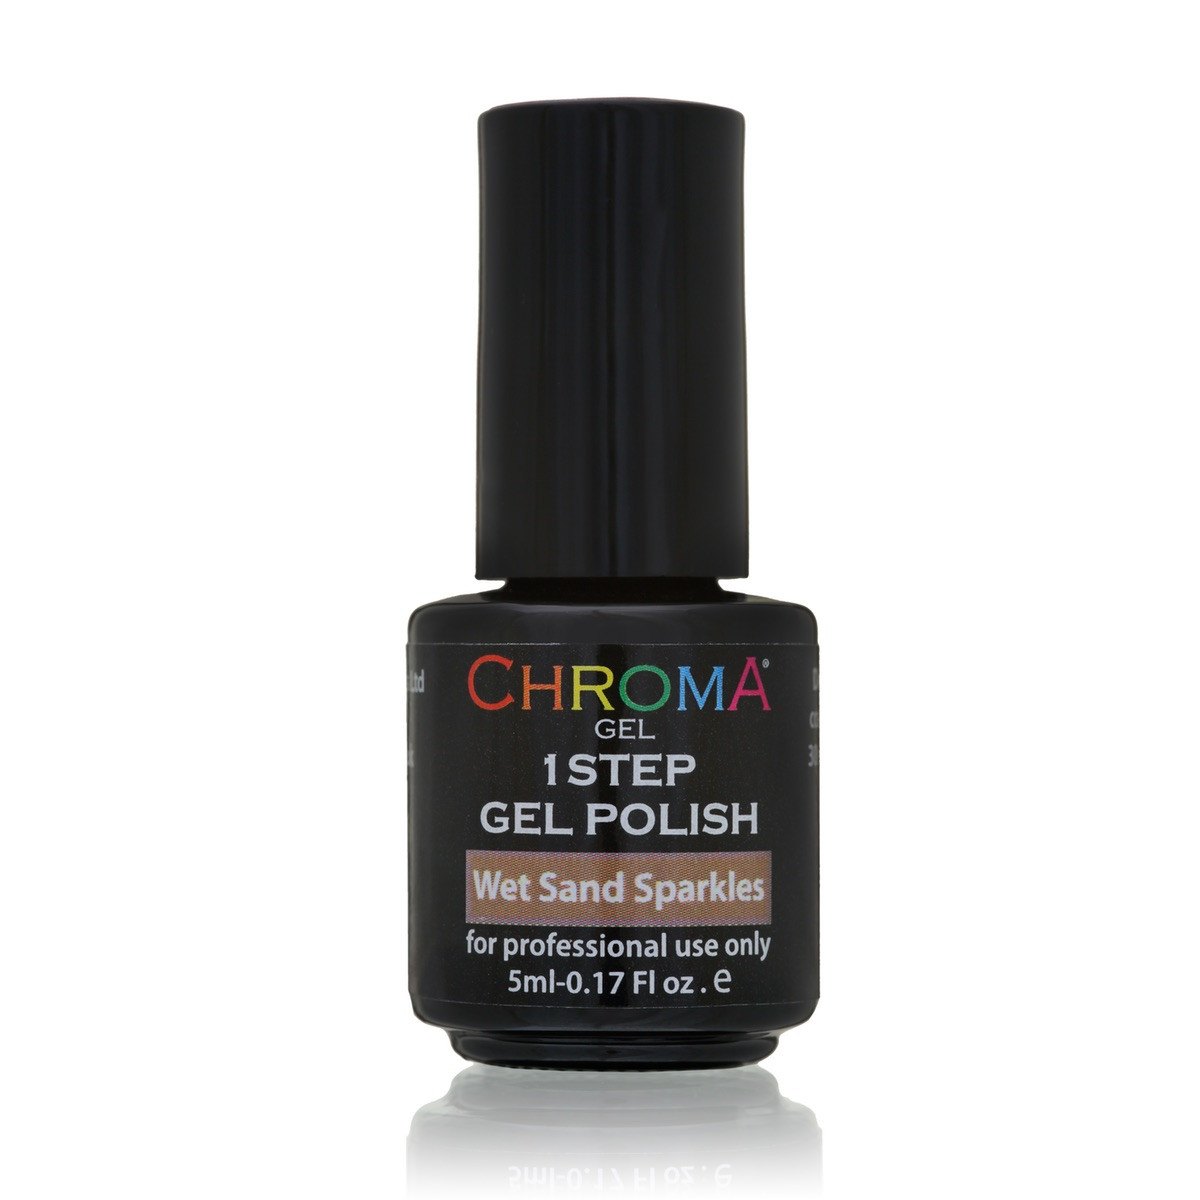 Chroma Gel 1 Step Gel Polish 5ml Wet Sand Sparkles No.64 - Beauty Hair Products LtdChroma Gel